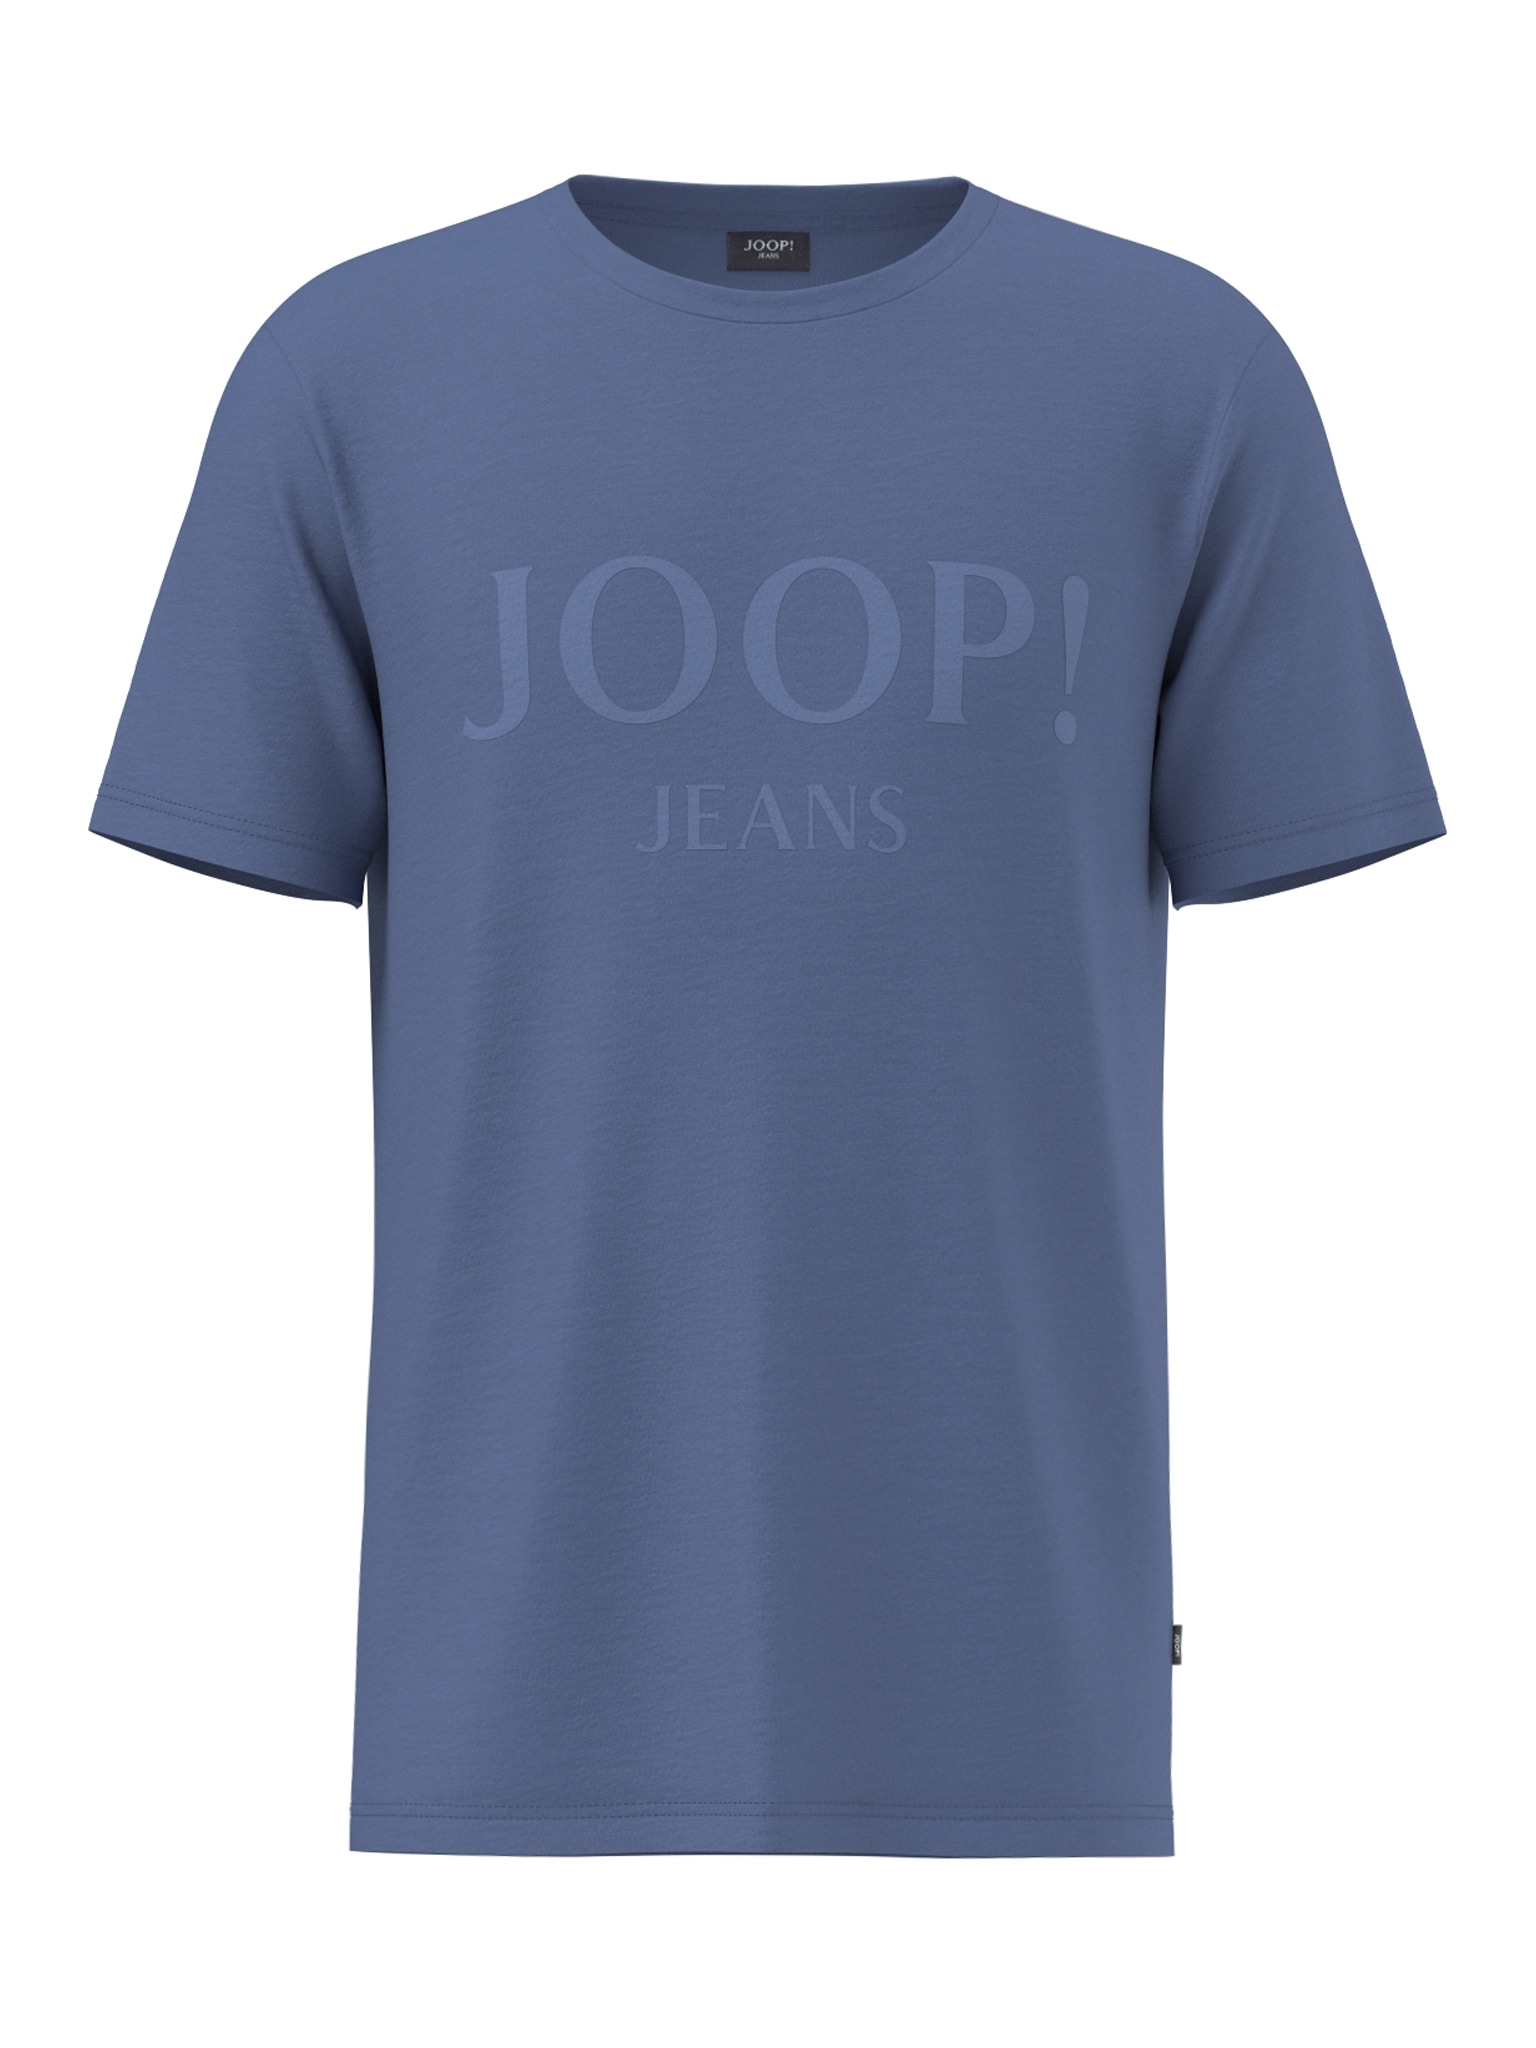 Joop Jeans T-Shirt »Alex« von Joop Jeans